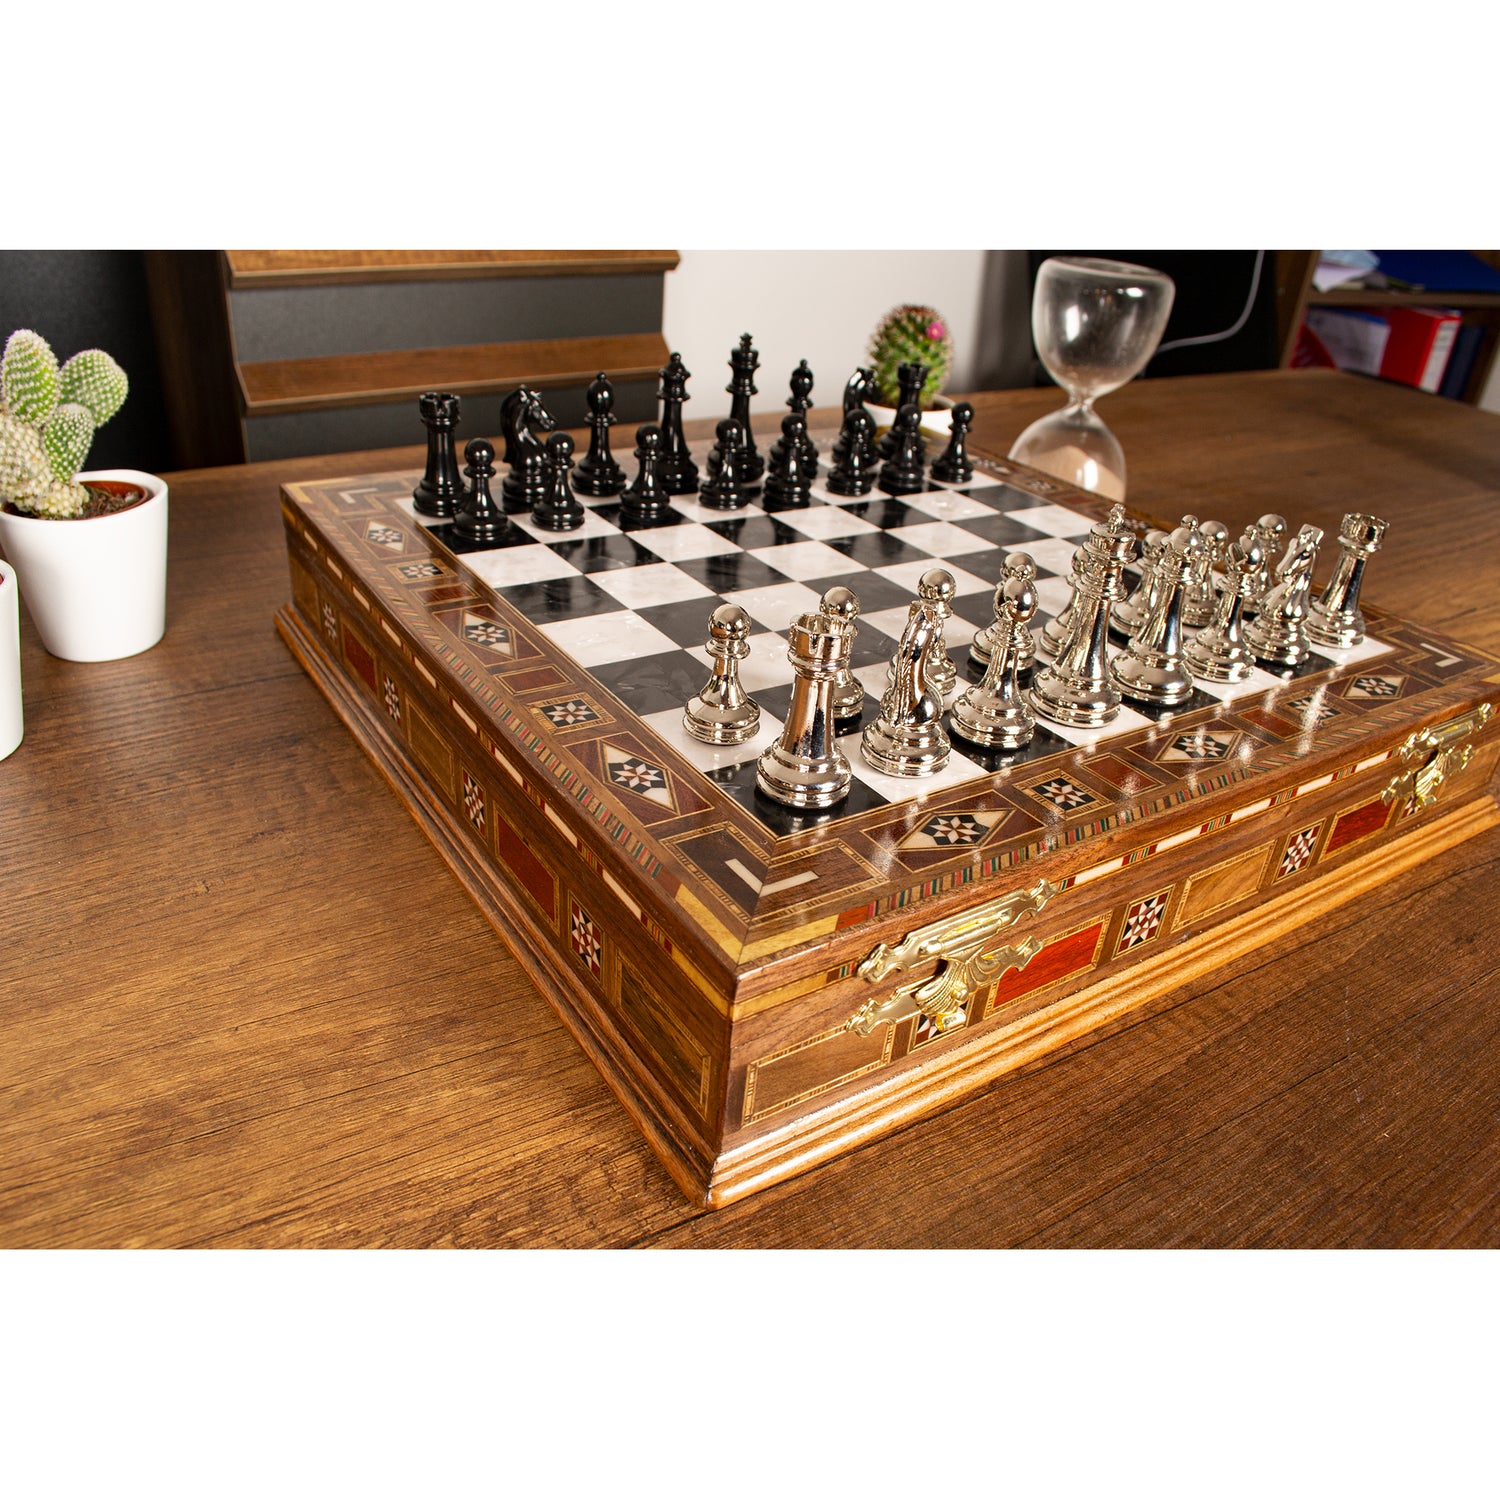 Premium Chess Board Set: Black & Silver Metal with Storage - Ketohandcraft